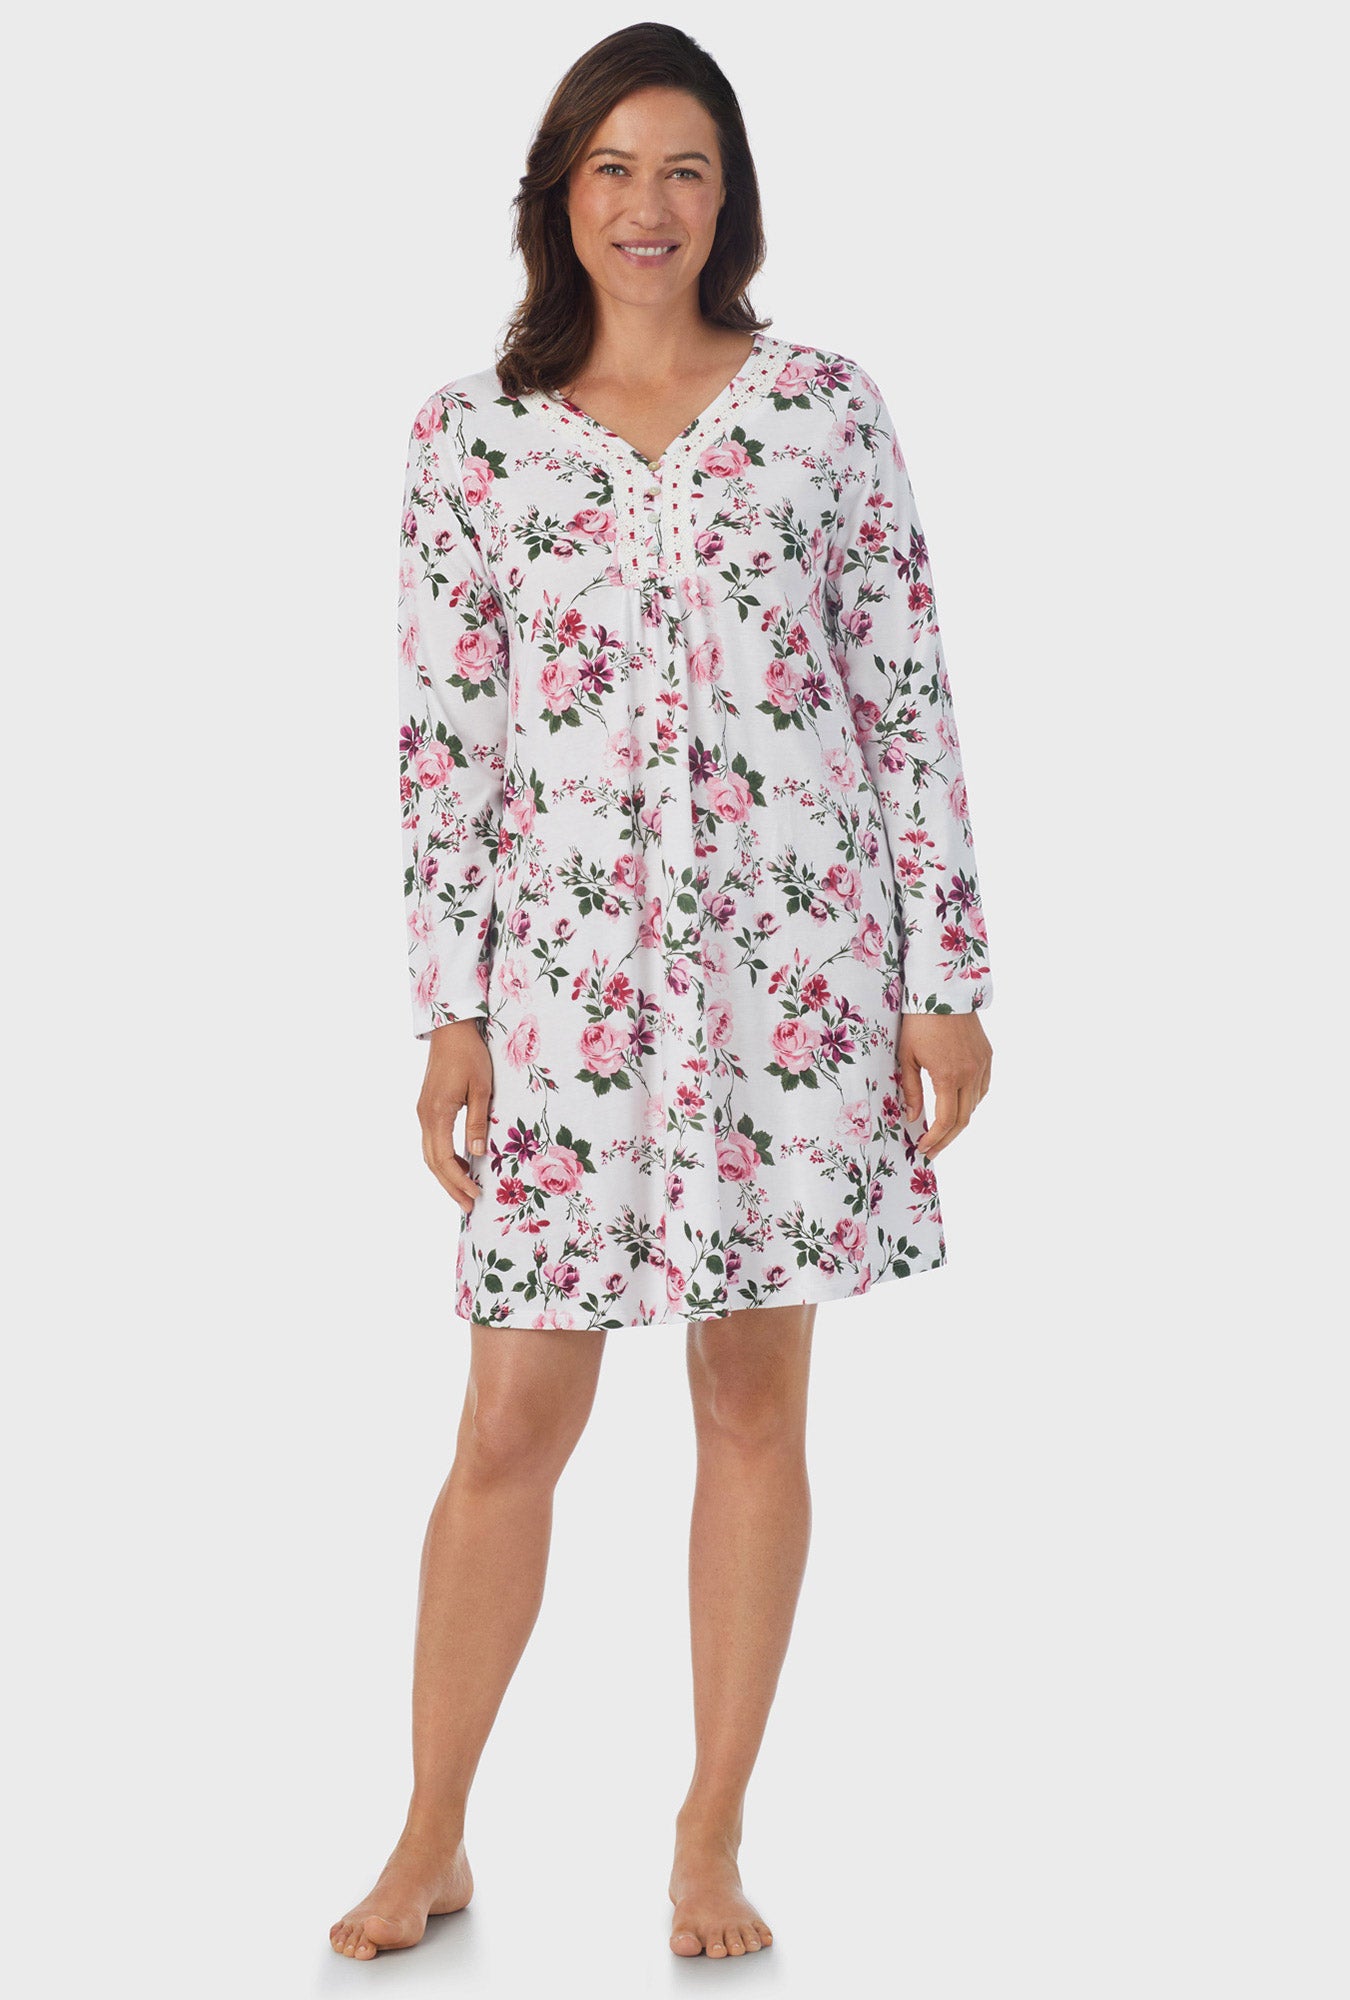 Pink and Magenta Floral 3/4 Sleeve Nightgown - Aria Sleepwear